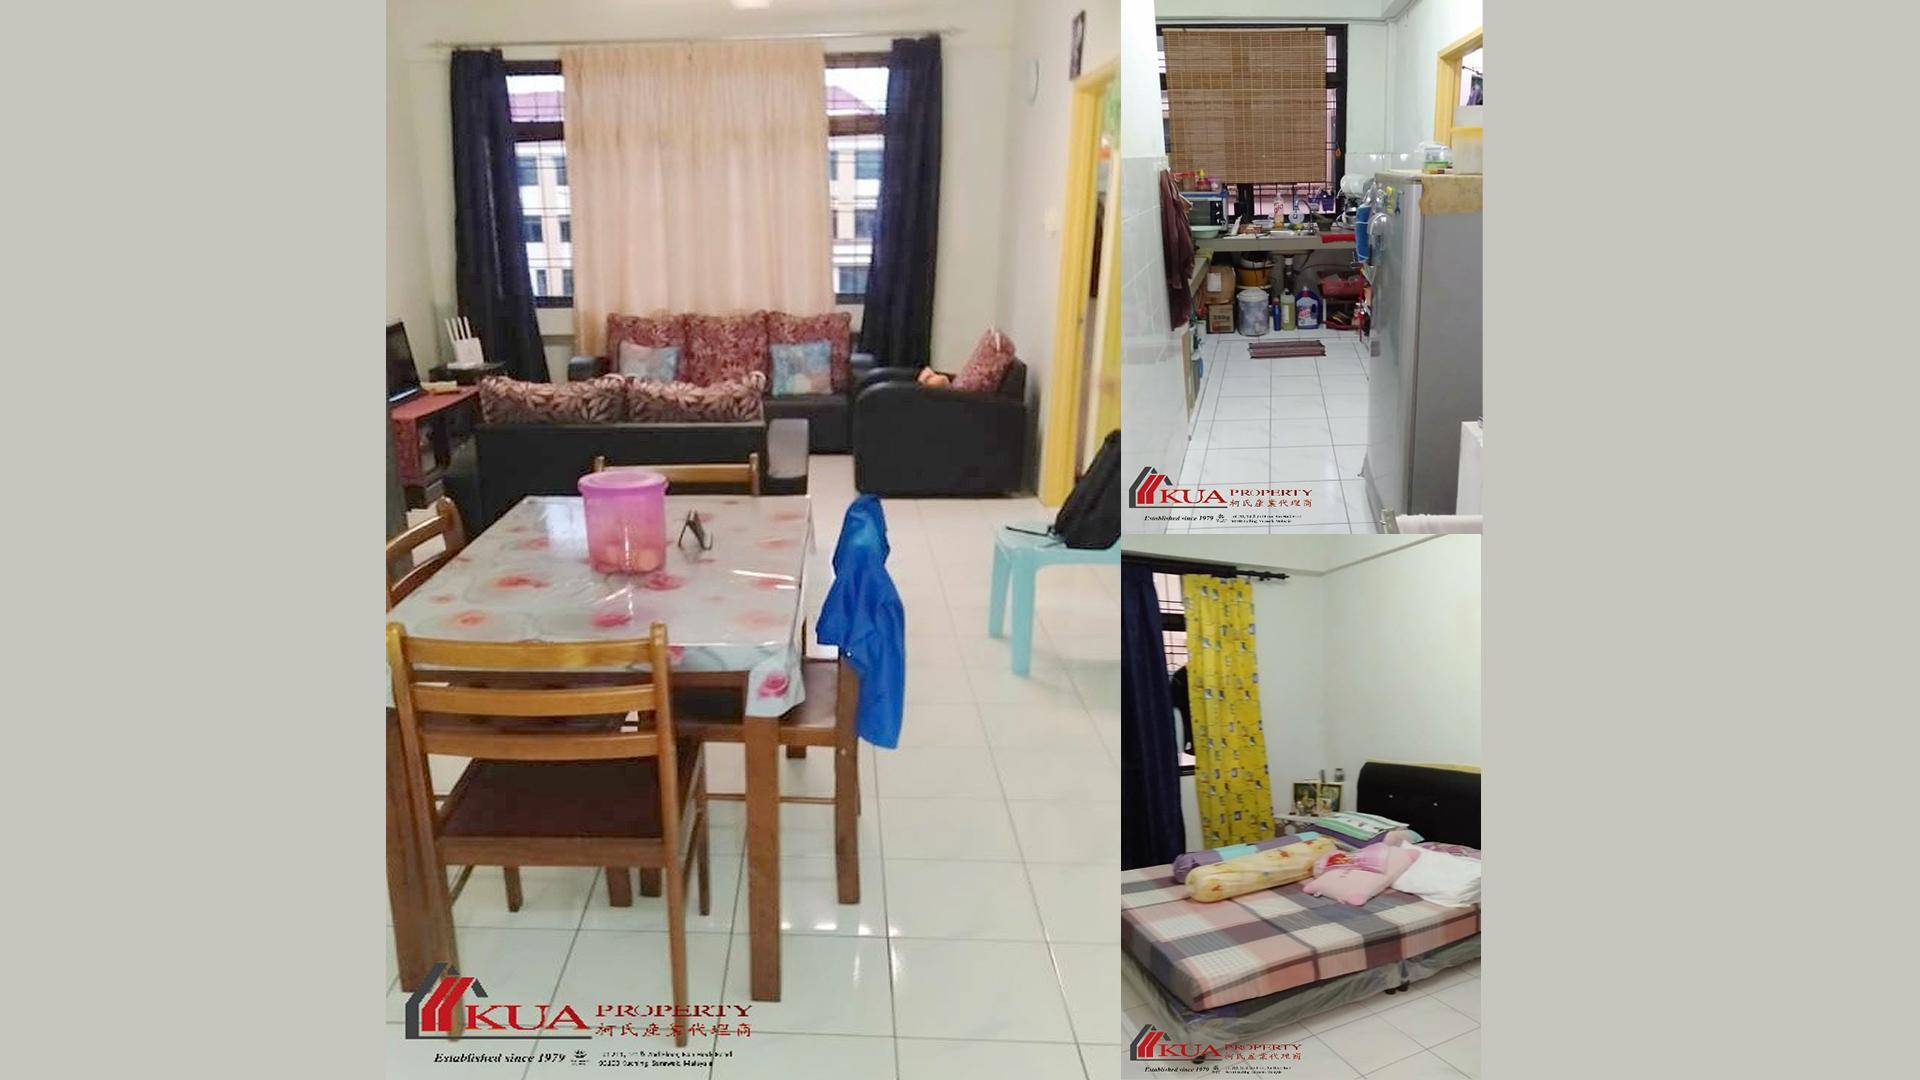 2nd Floor Apartment/Shophouse (Corner Unit) For Sale! Located at MJC, Batu Kawa, Kuching